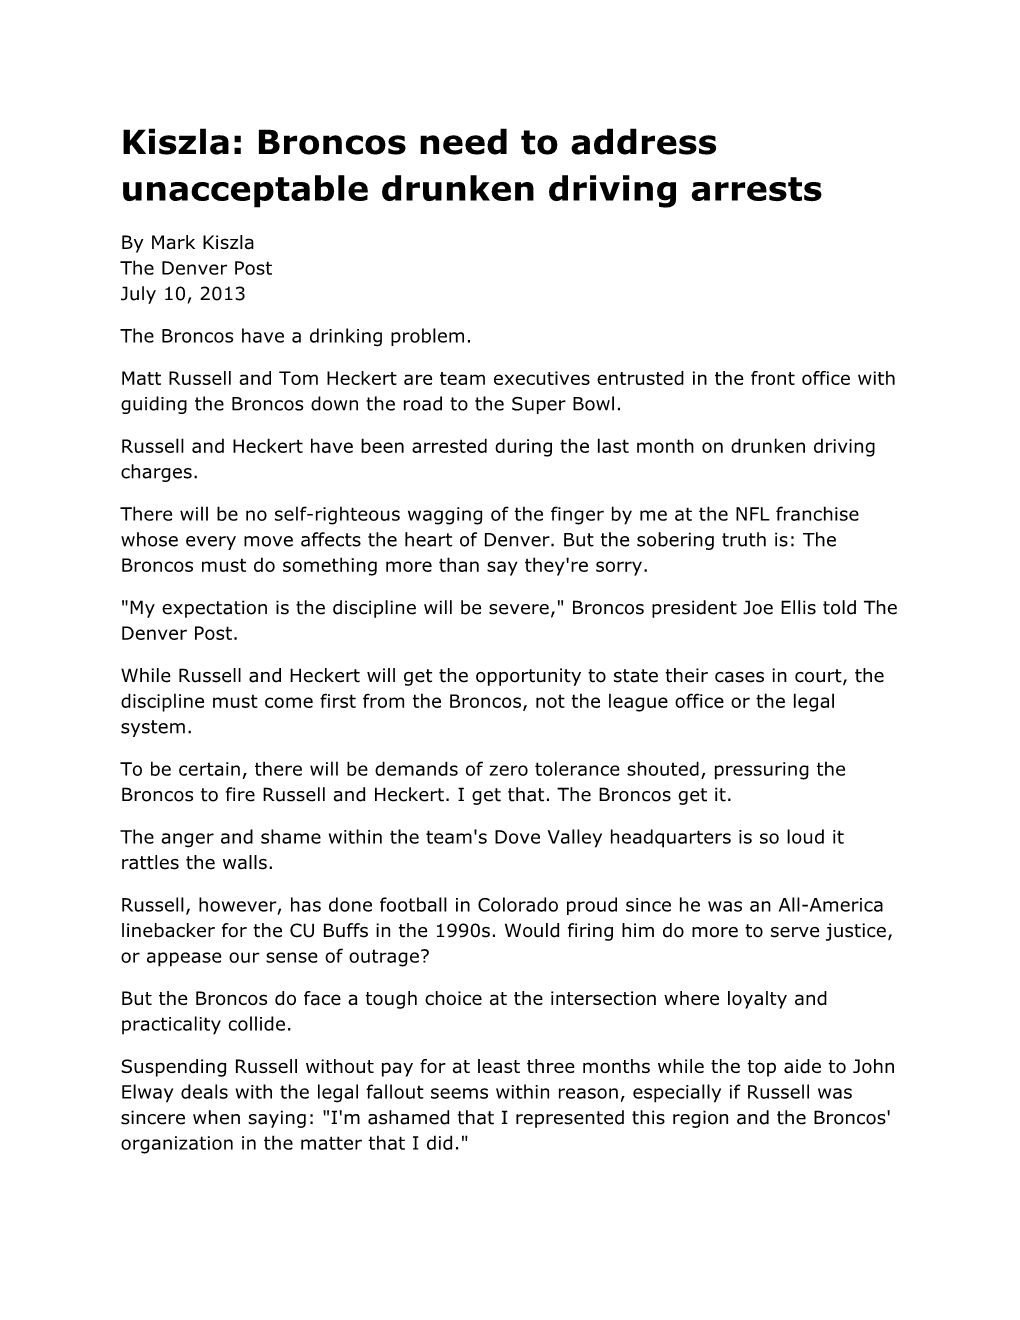 Kiszla: Broncos Need to Address Unacceptable Drunken Driving Arrests